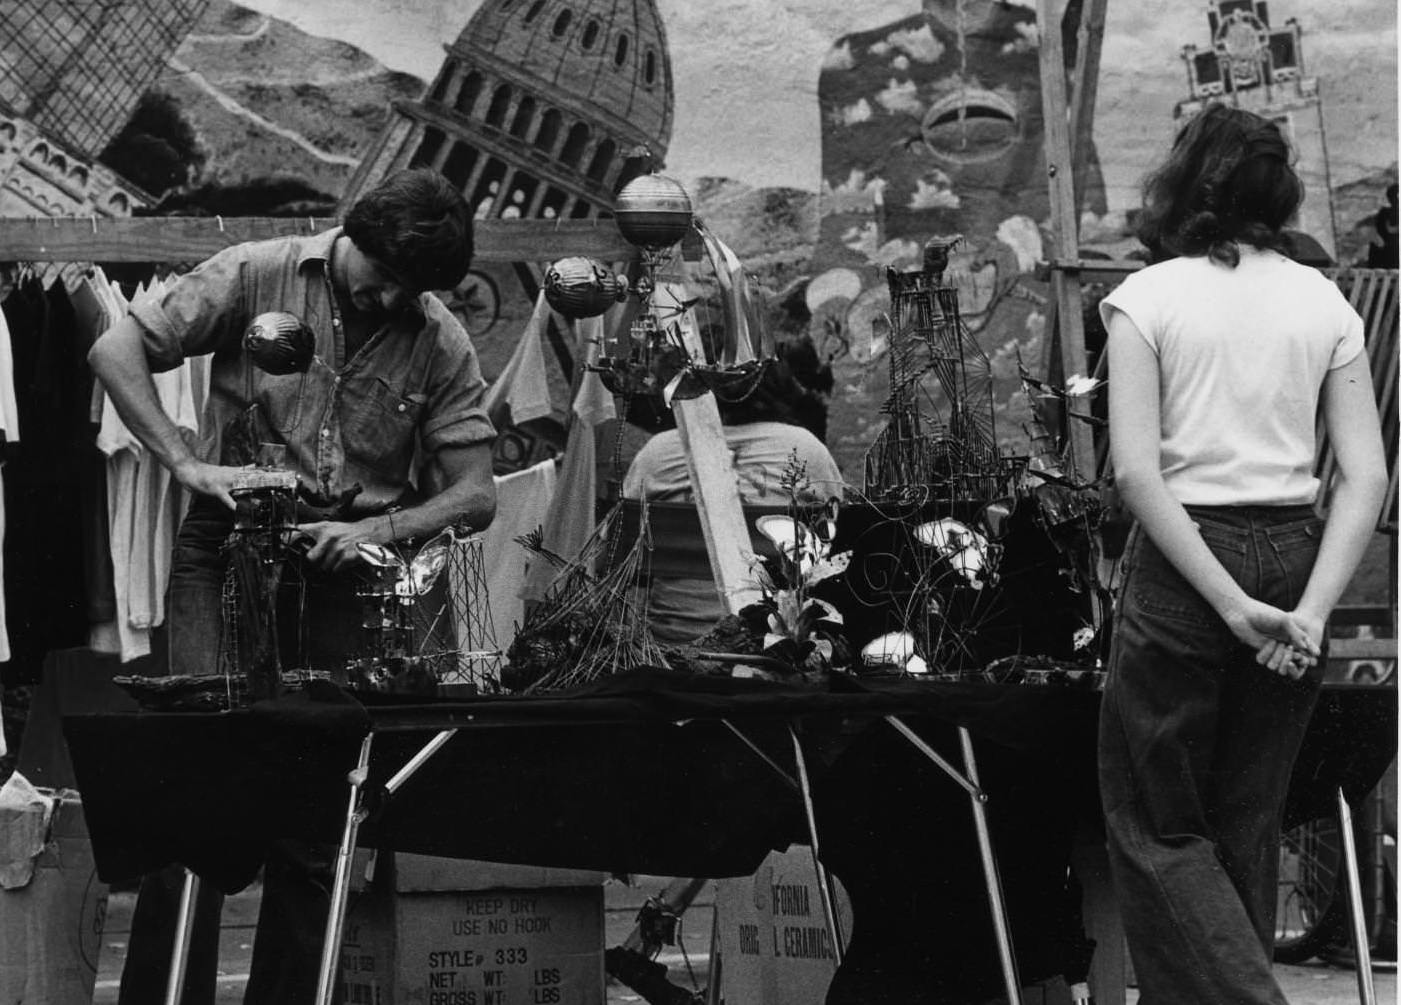 Metalsmith sculptor selling wares at the Renaissance Market, 1977